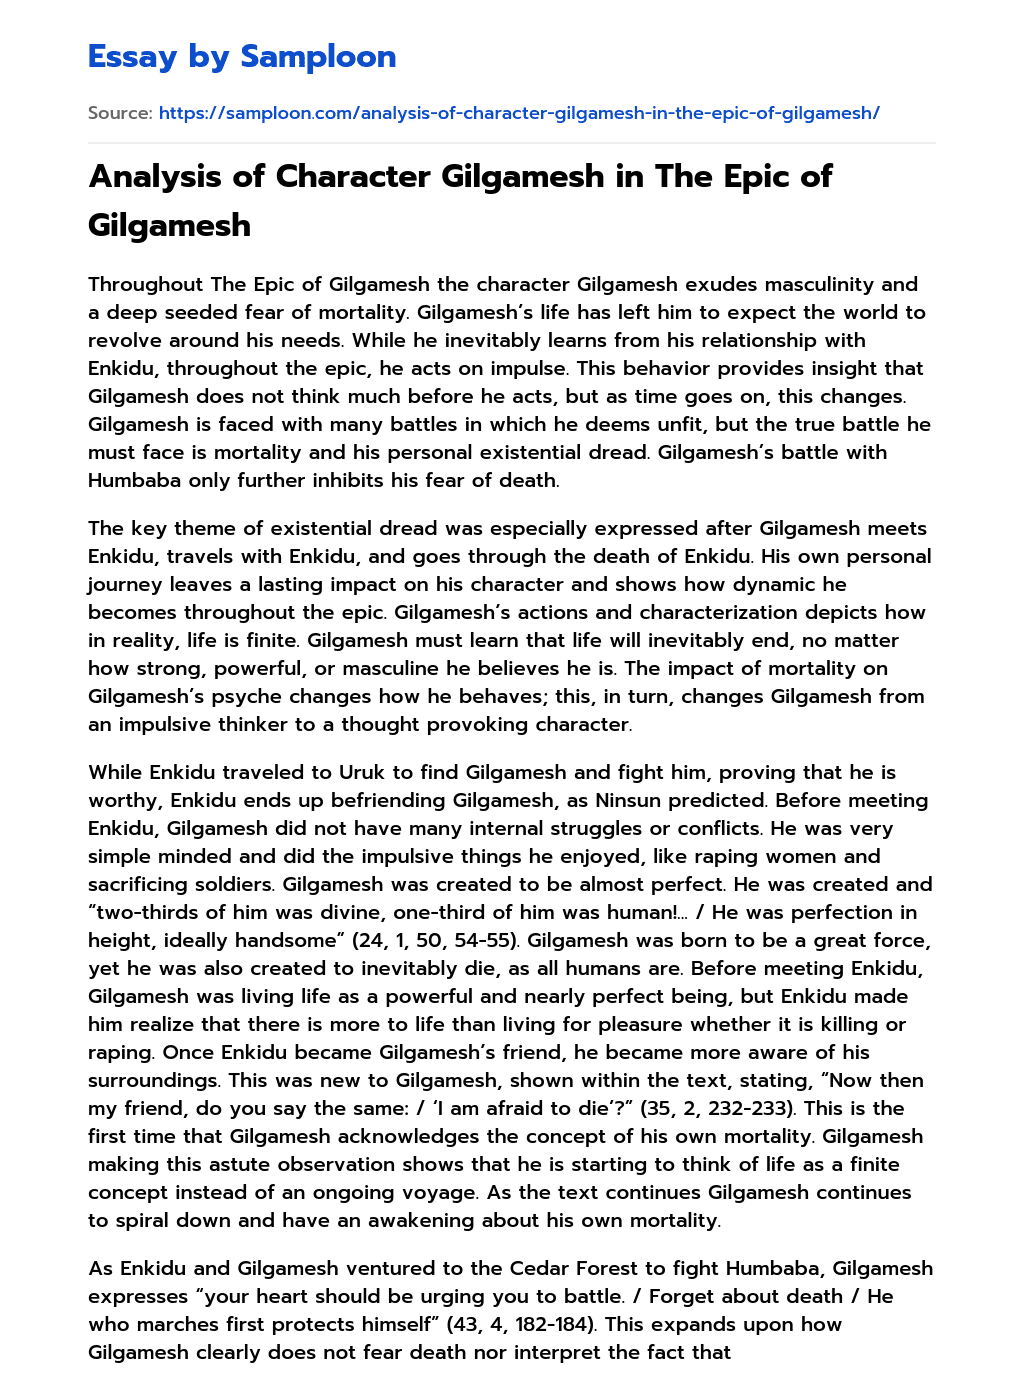 Analysis of Character Gilgamesh in The Epic of Gilgamesh essay